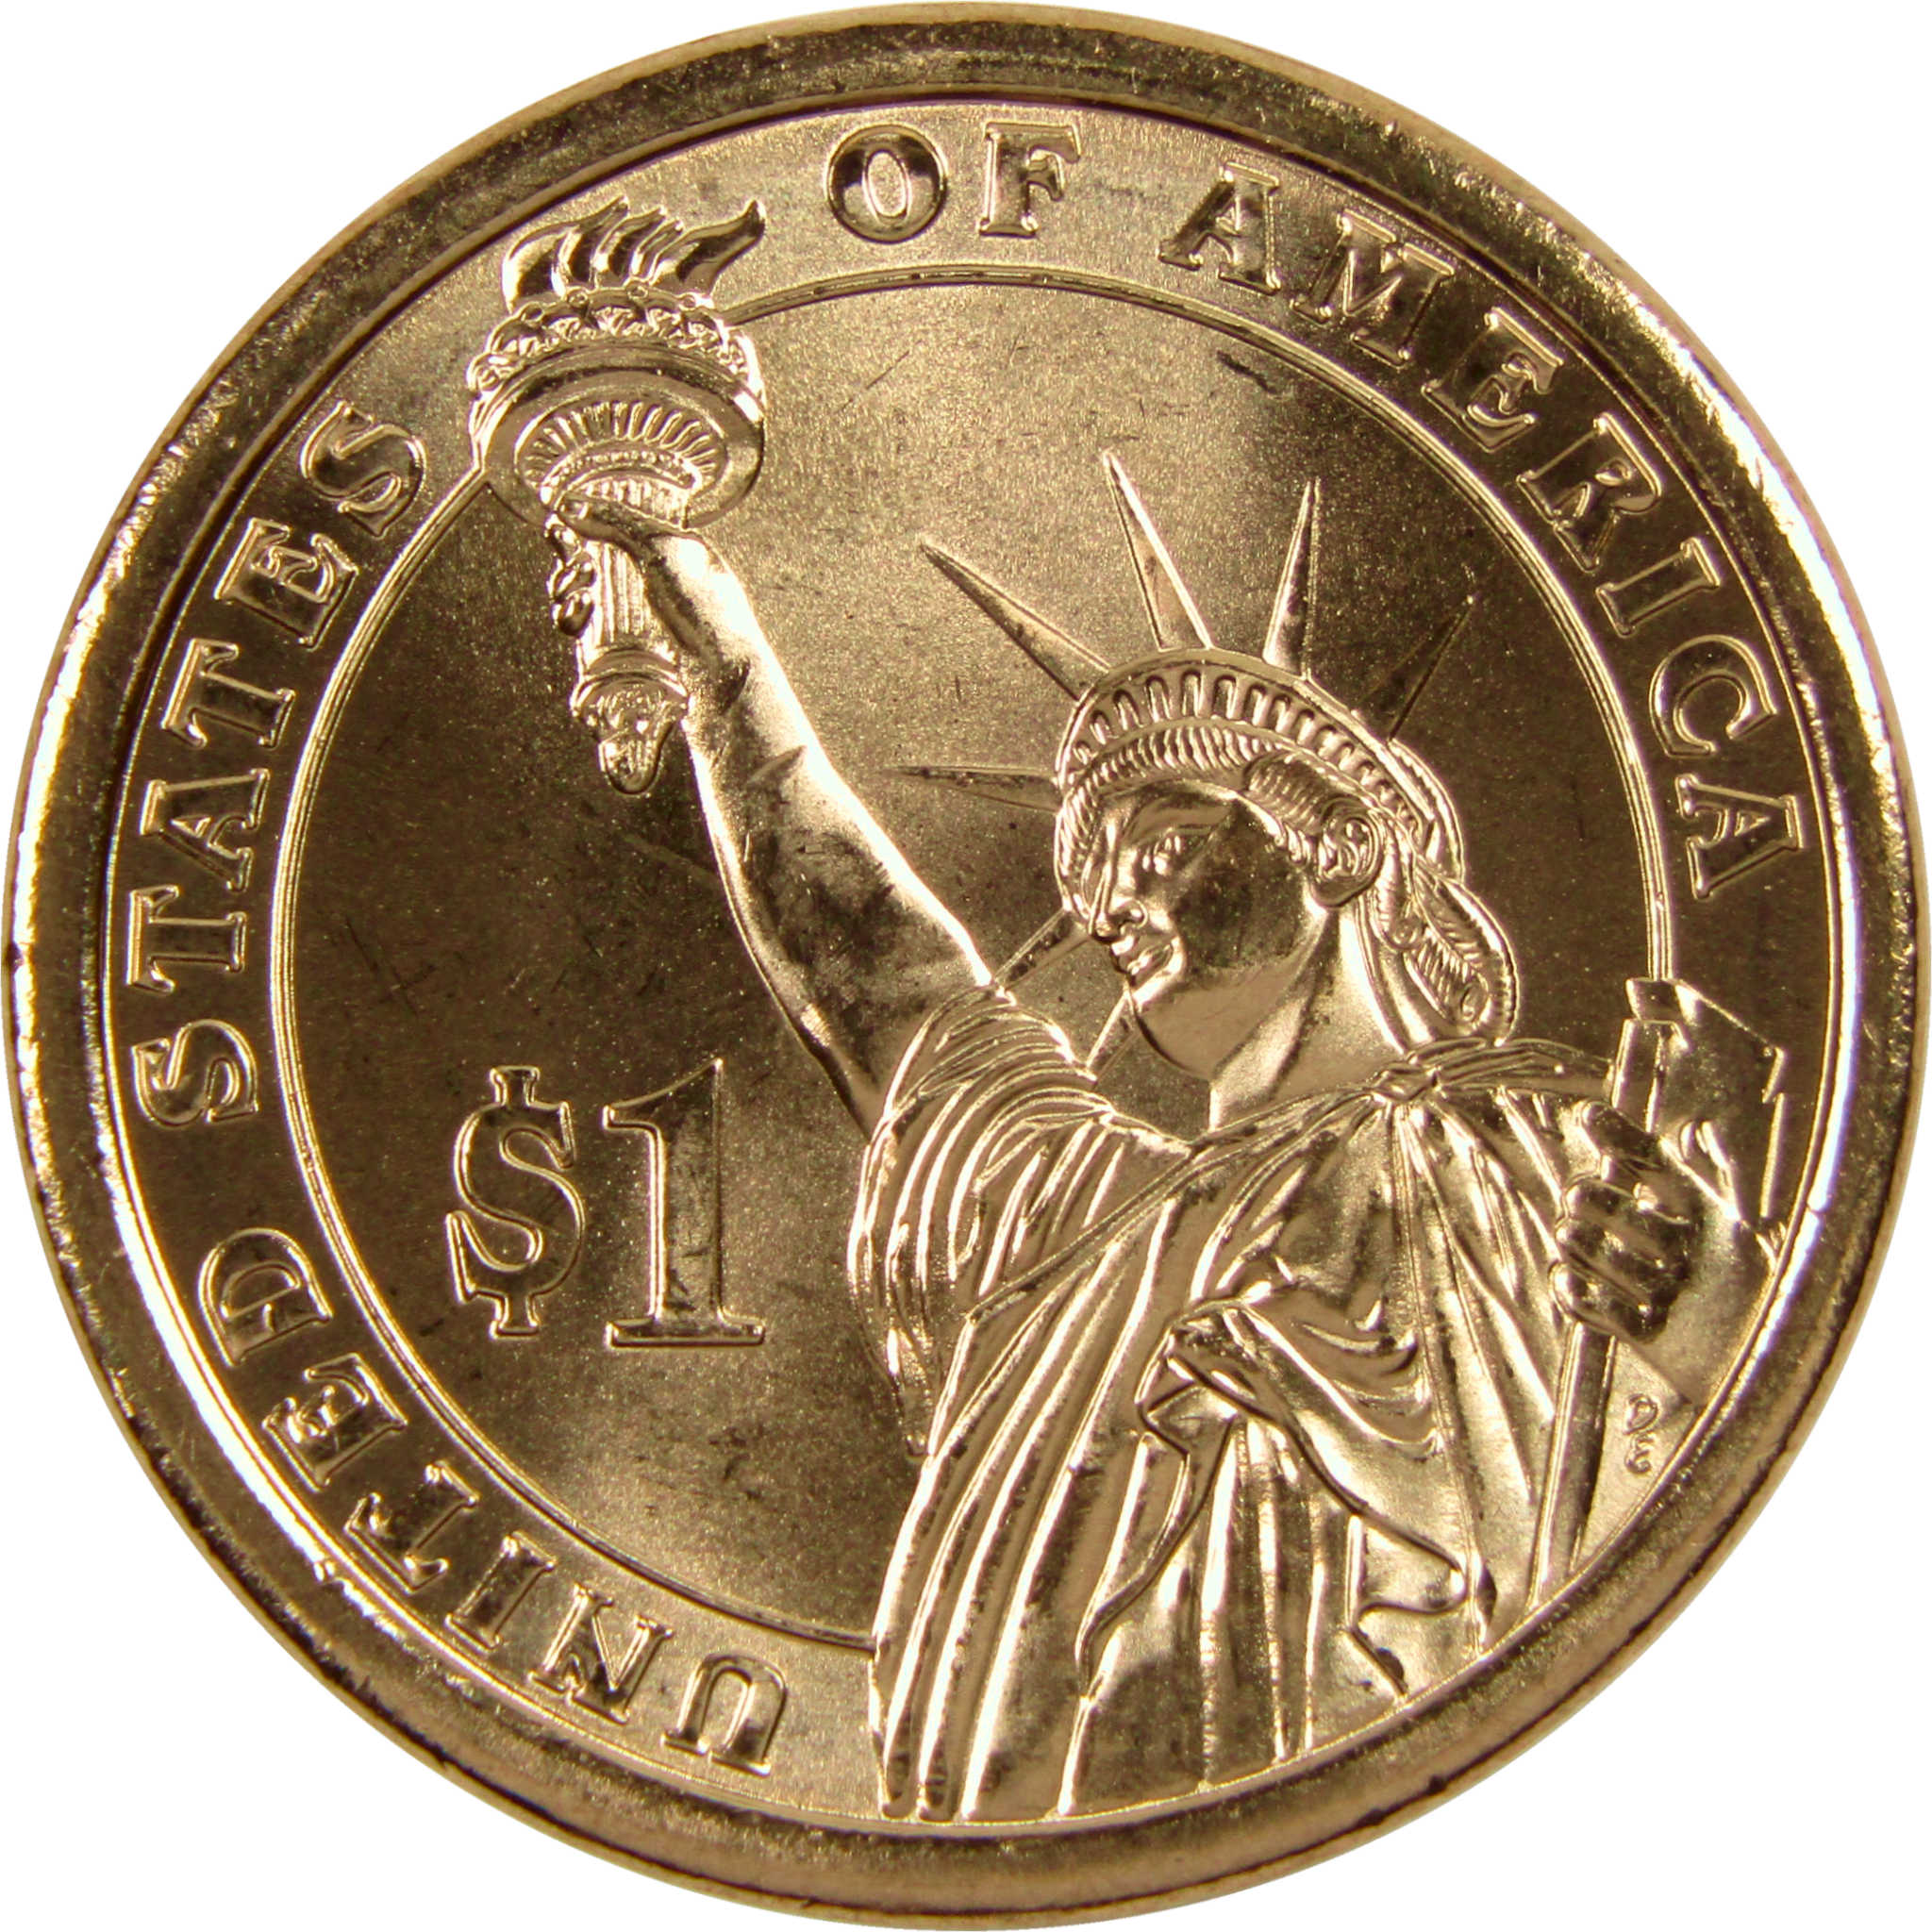 2008 D John Quincy Adams Presidential Dollar BU Uncirculated $1 Coin